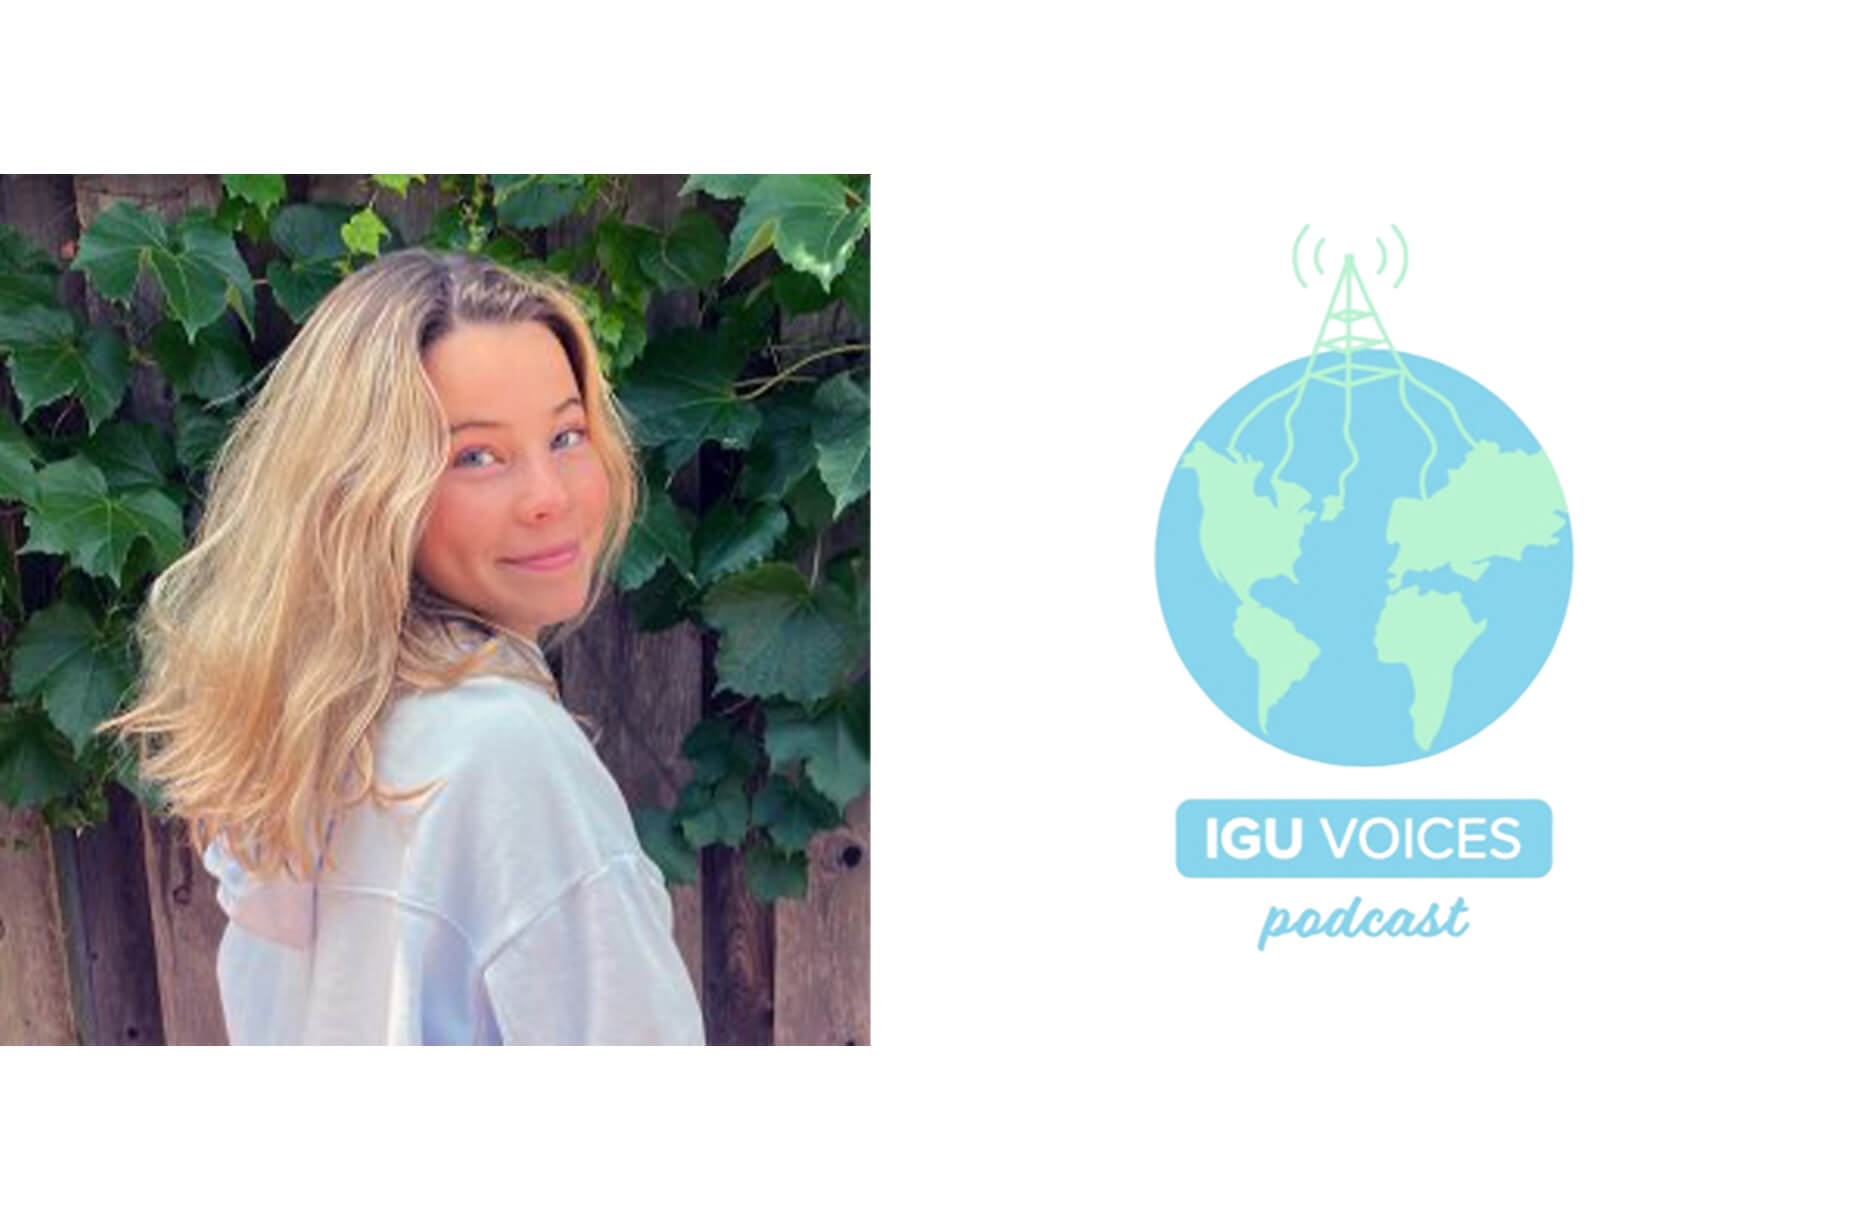 Graduate Student Gwiazda to Lead “IGU Voices” Podcast